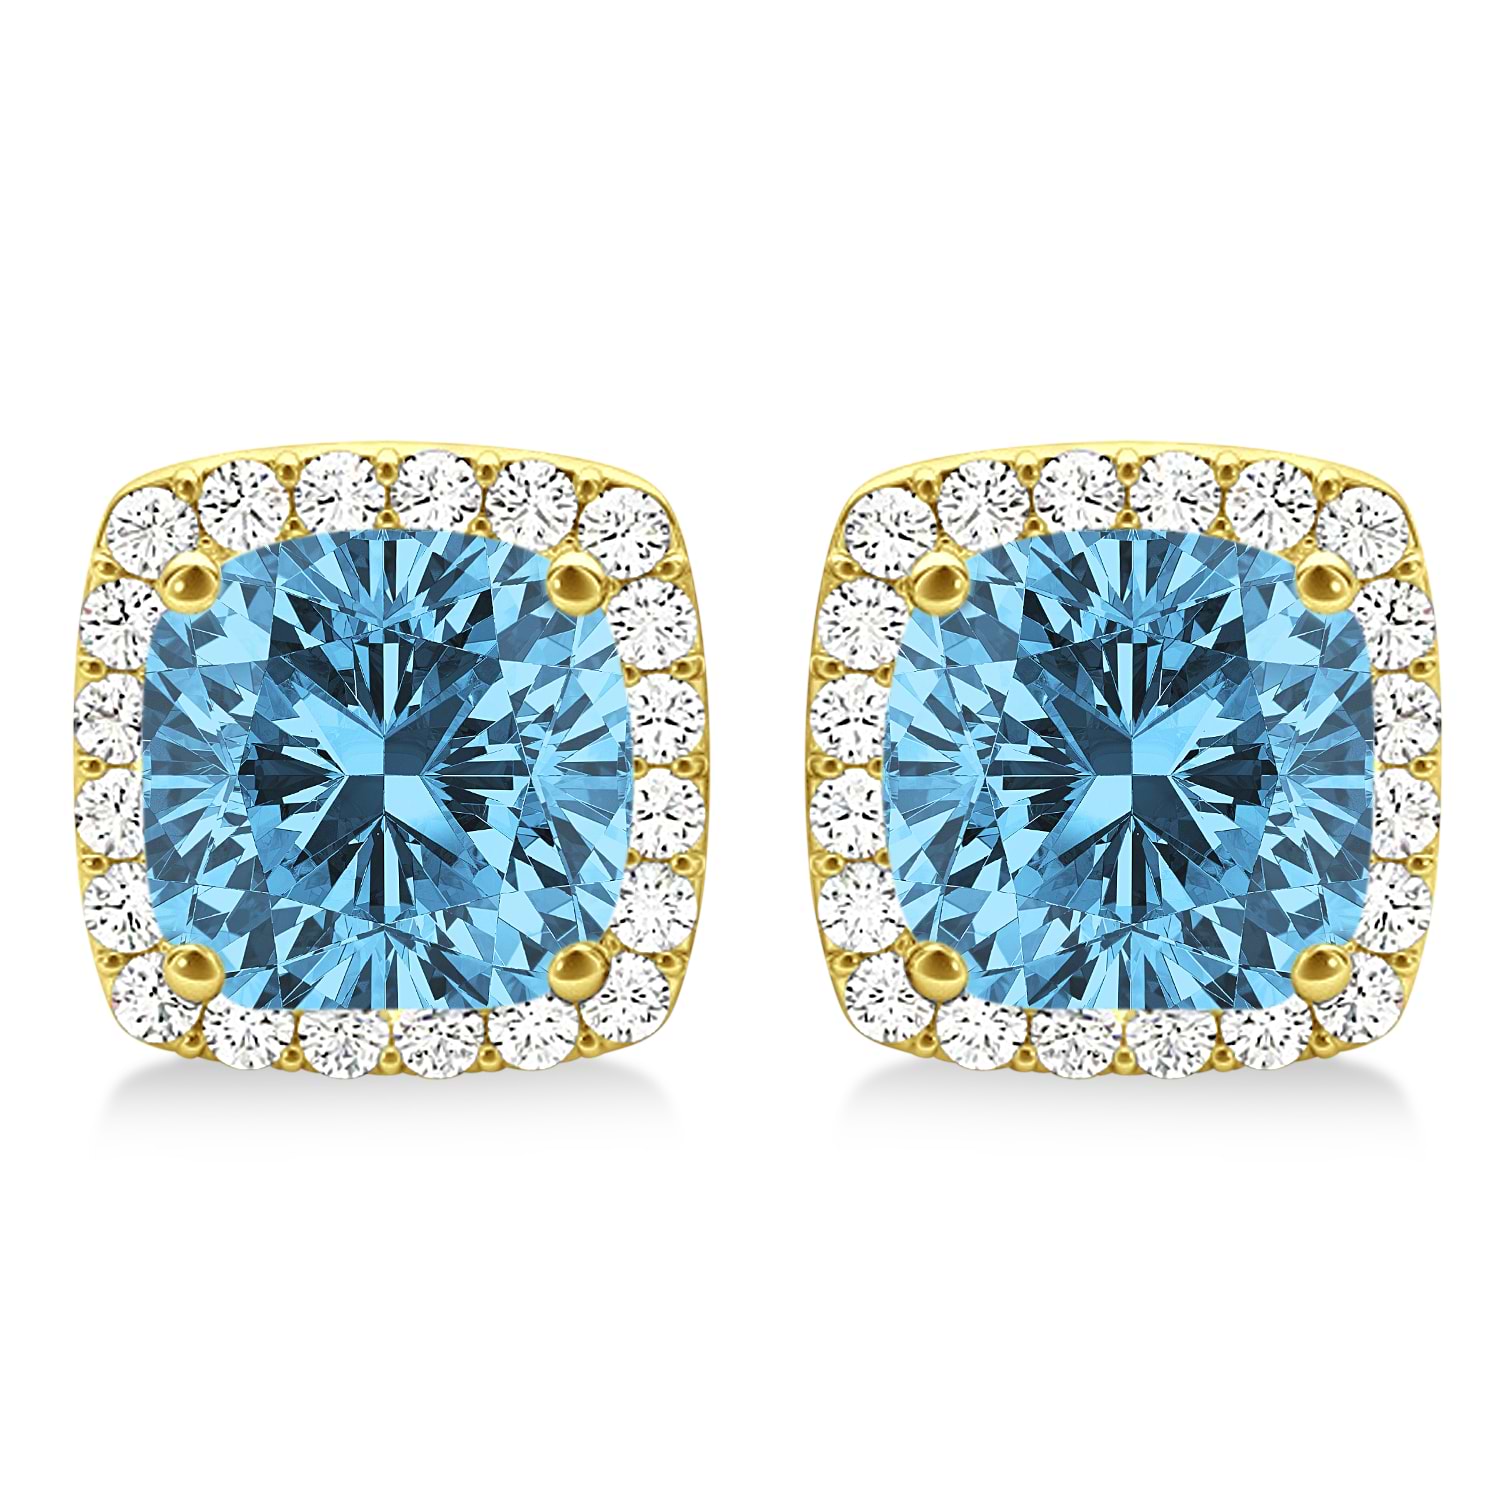 Cushion Cut Blue Topaz & Diamond Halo Earrings 14k Yellow Gold (1.50ct)